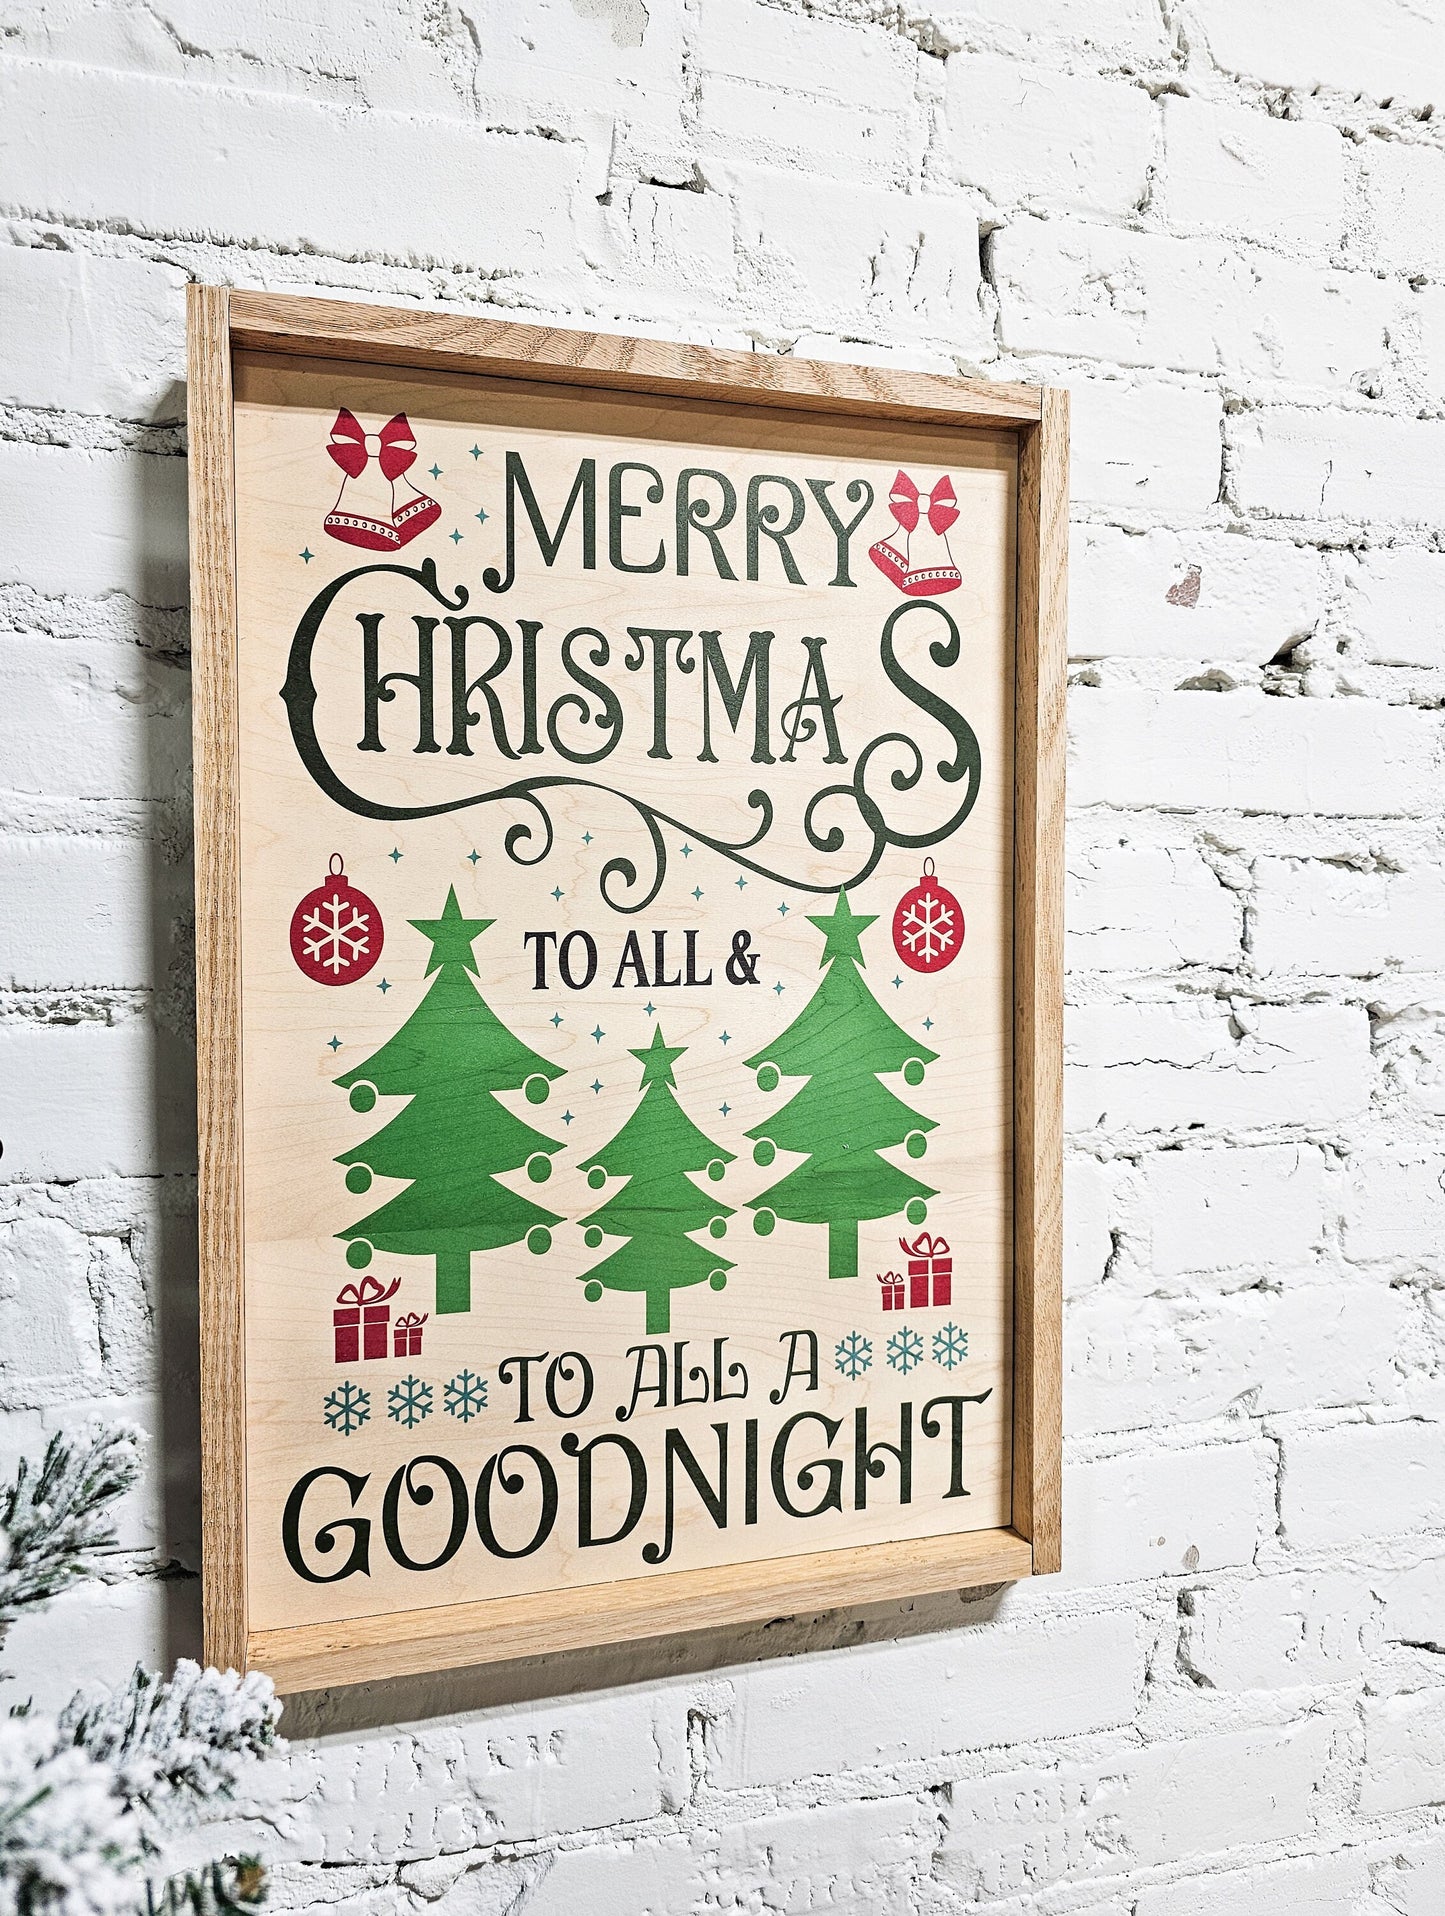 Merry Christmas to all Goodnight Decor Wooden Sign, Framed, Santa Reindeer, Holiday Season, Xmas Tree, Snowflakes, Farmhouse Boho Natural